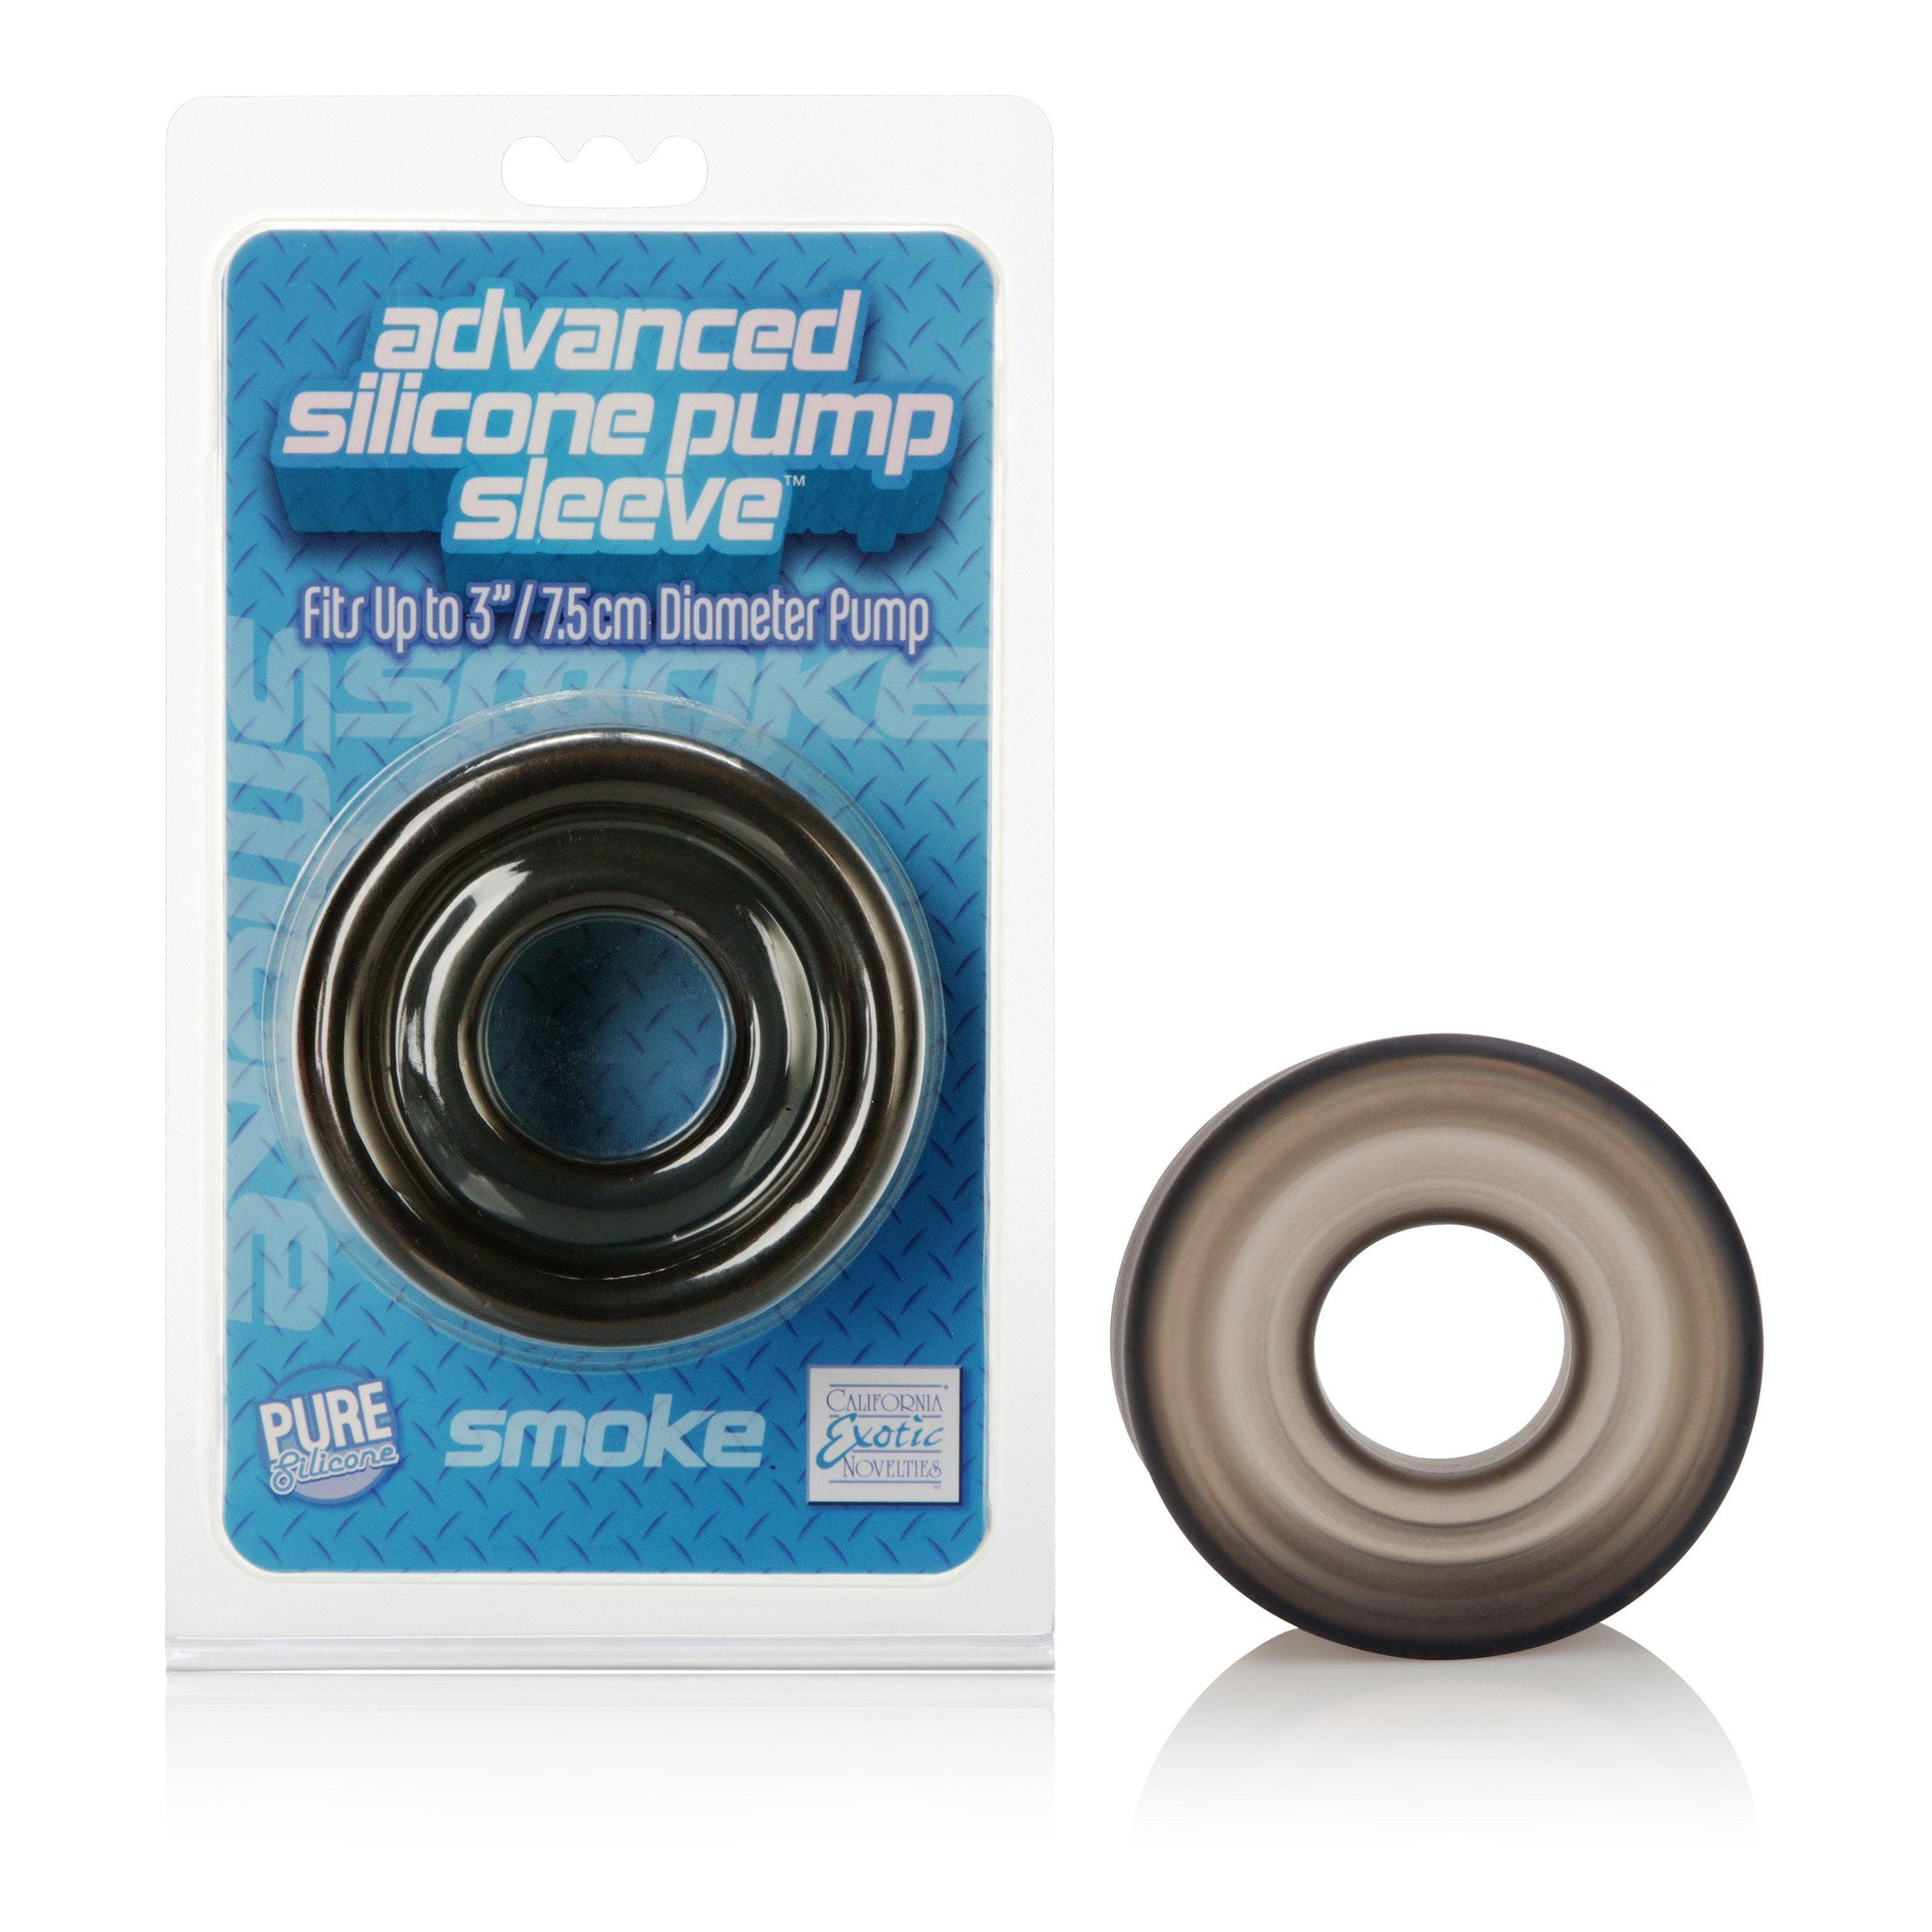 Advanced Silicone Pump Sleeve - Smoke